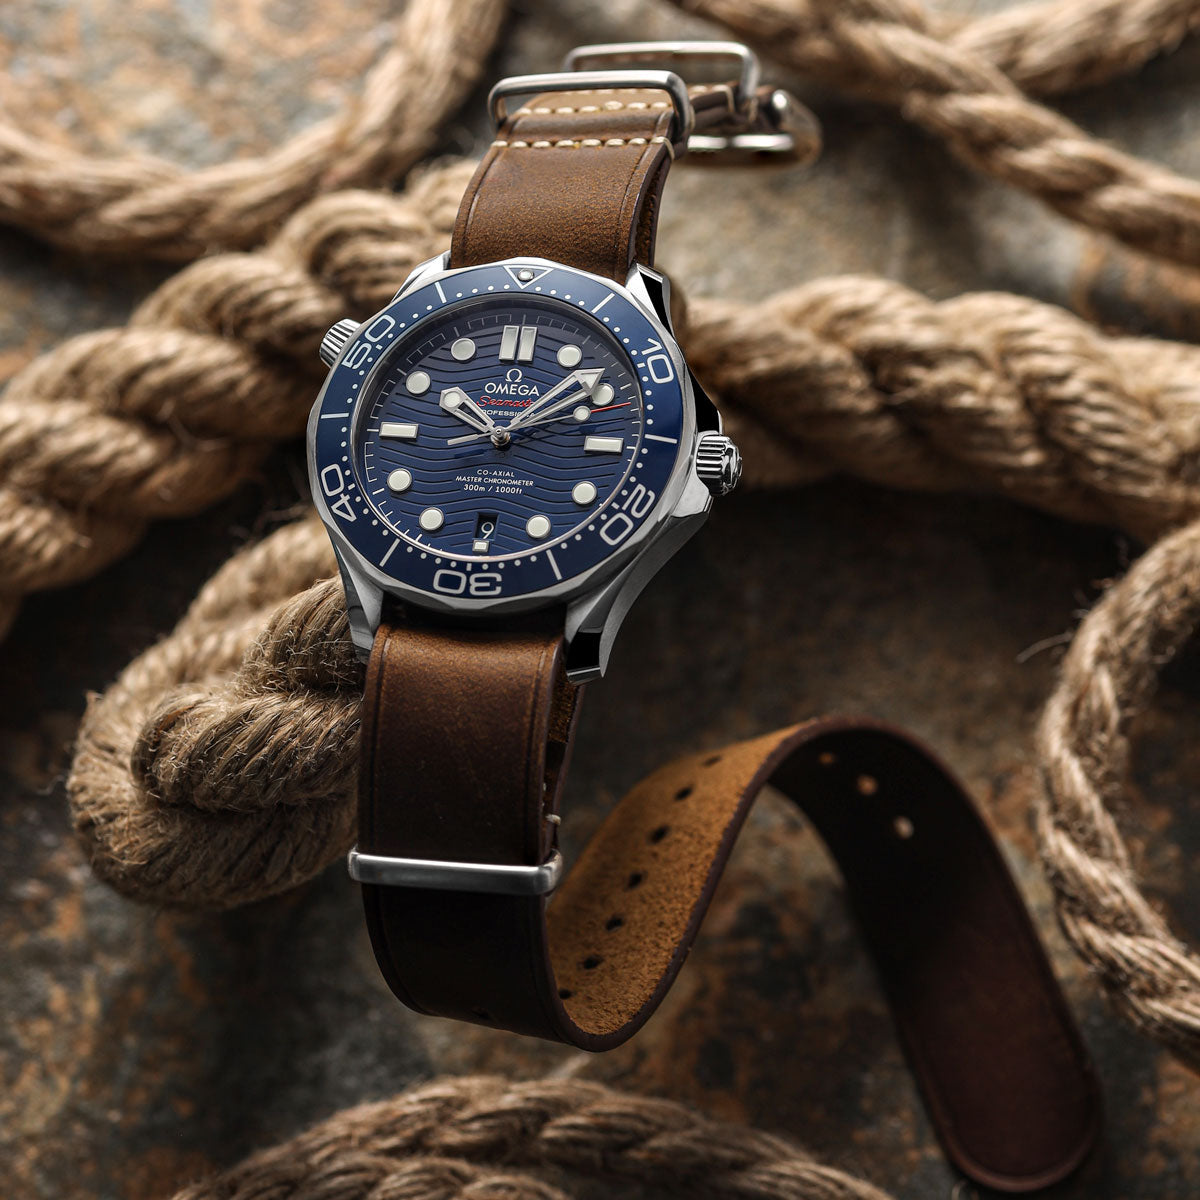 Chestnut coloured crazy hourse leather NATO watch strap